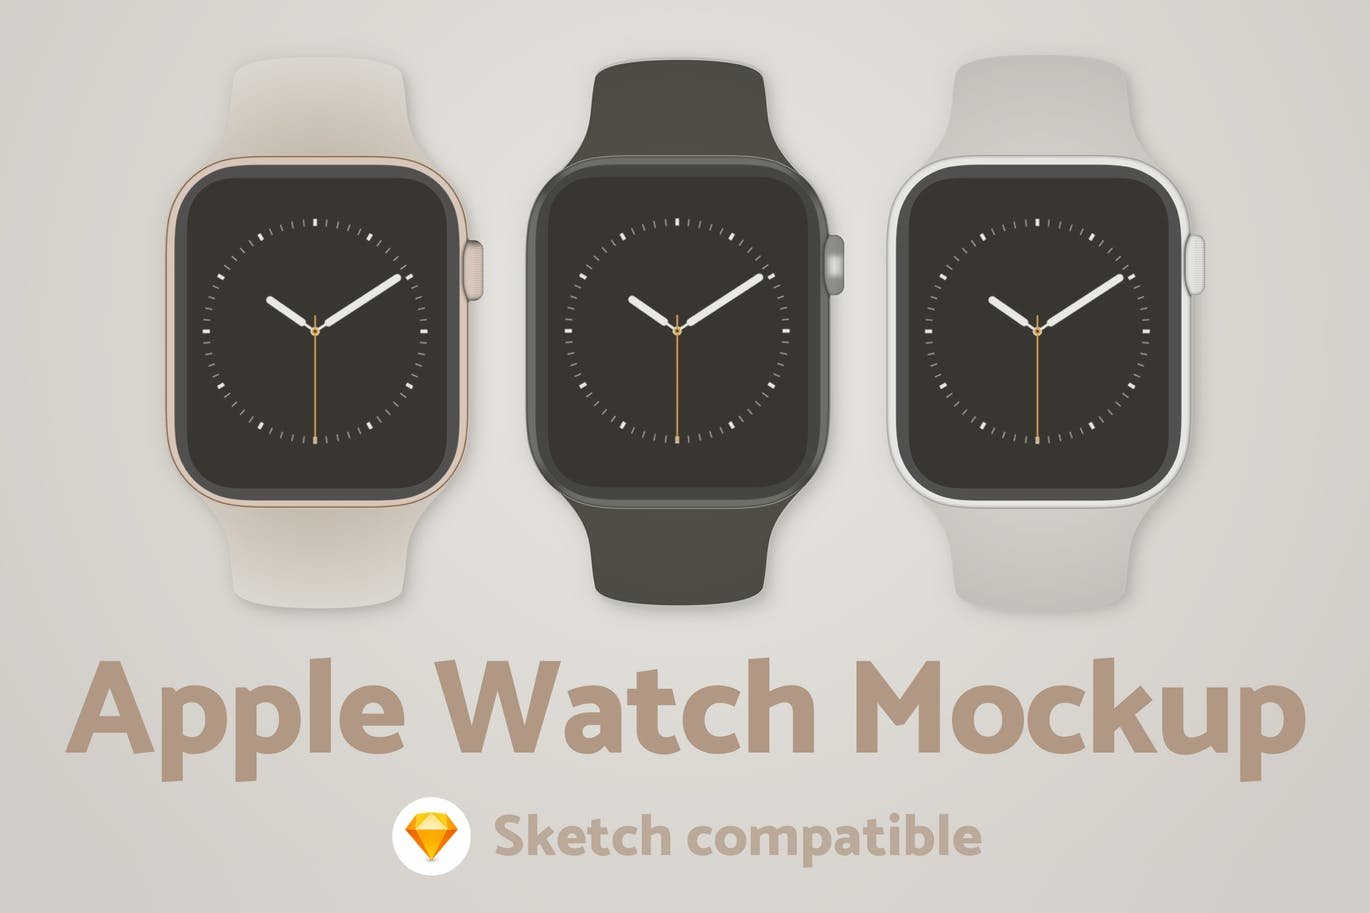 Apple Watch Sketch Mockup